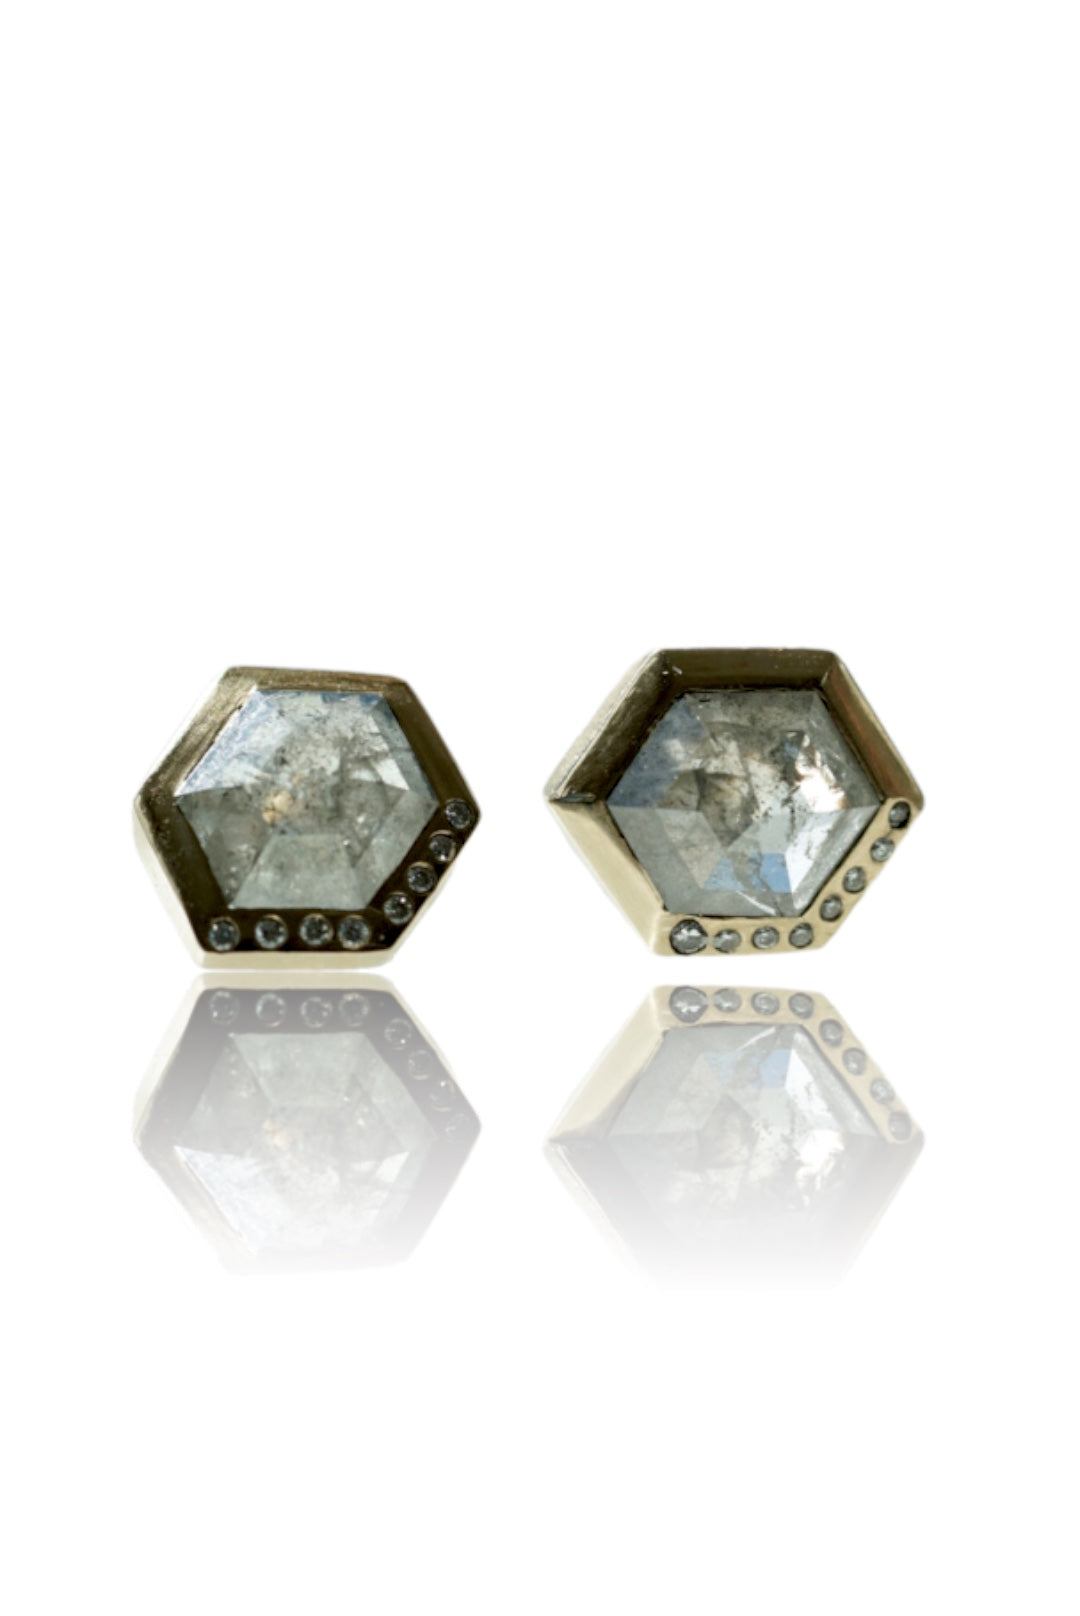 Salt and Pepper Hexagon Diamond earrings w/ accent diamonds